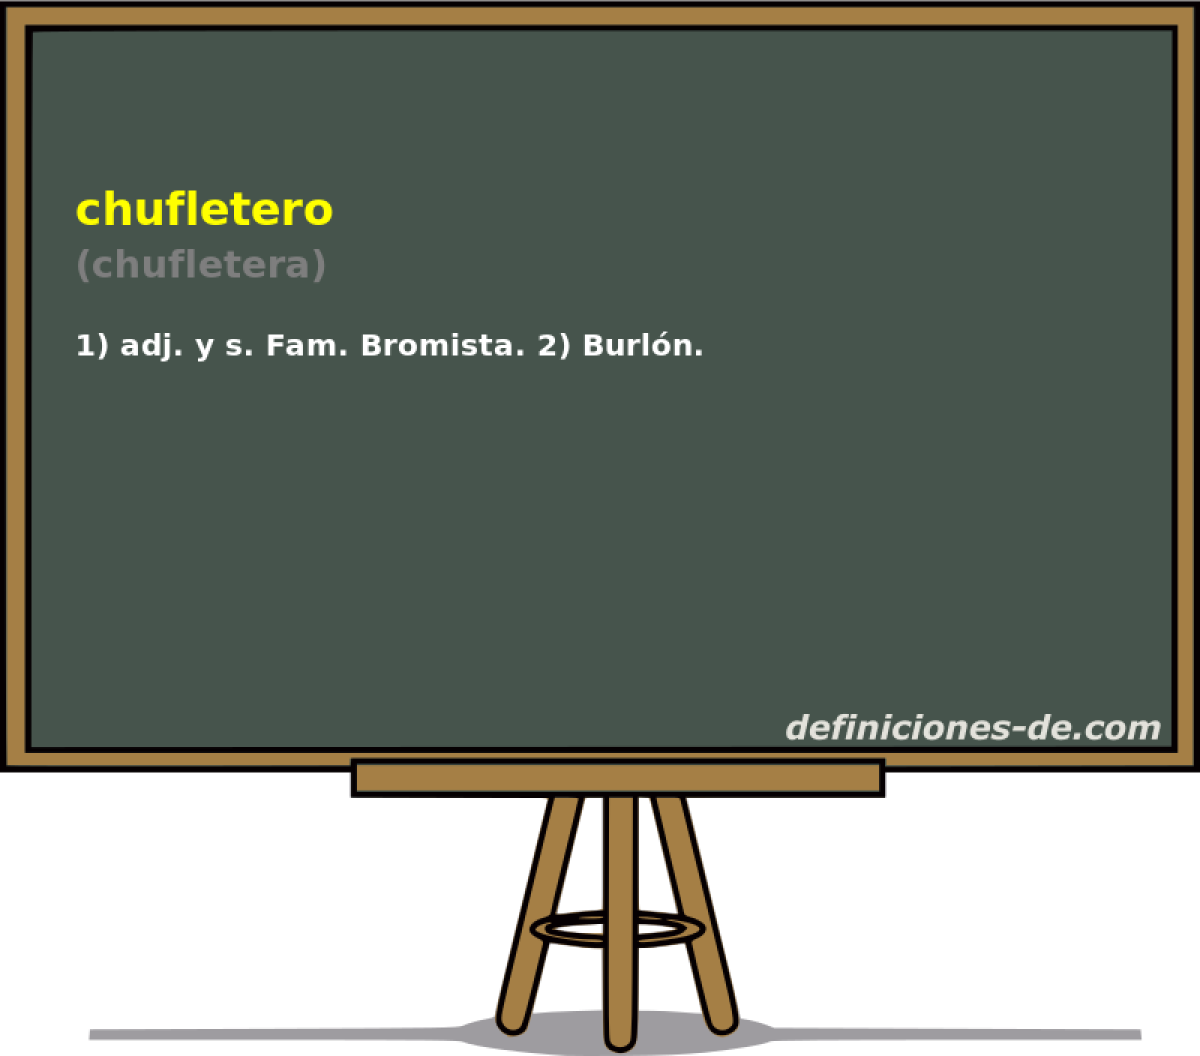 chufletero (chufletera)